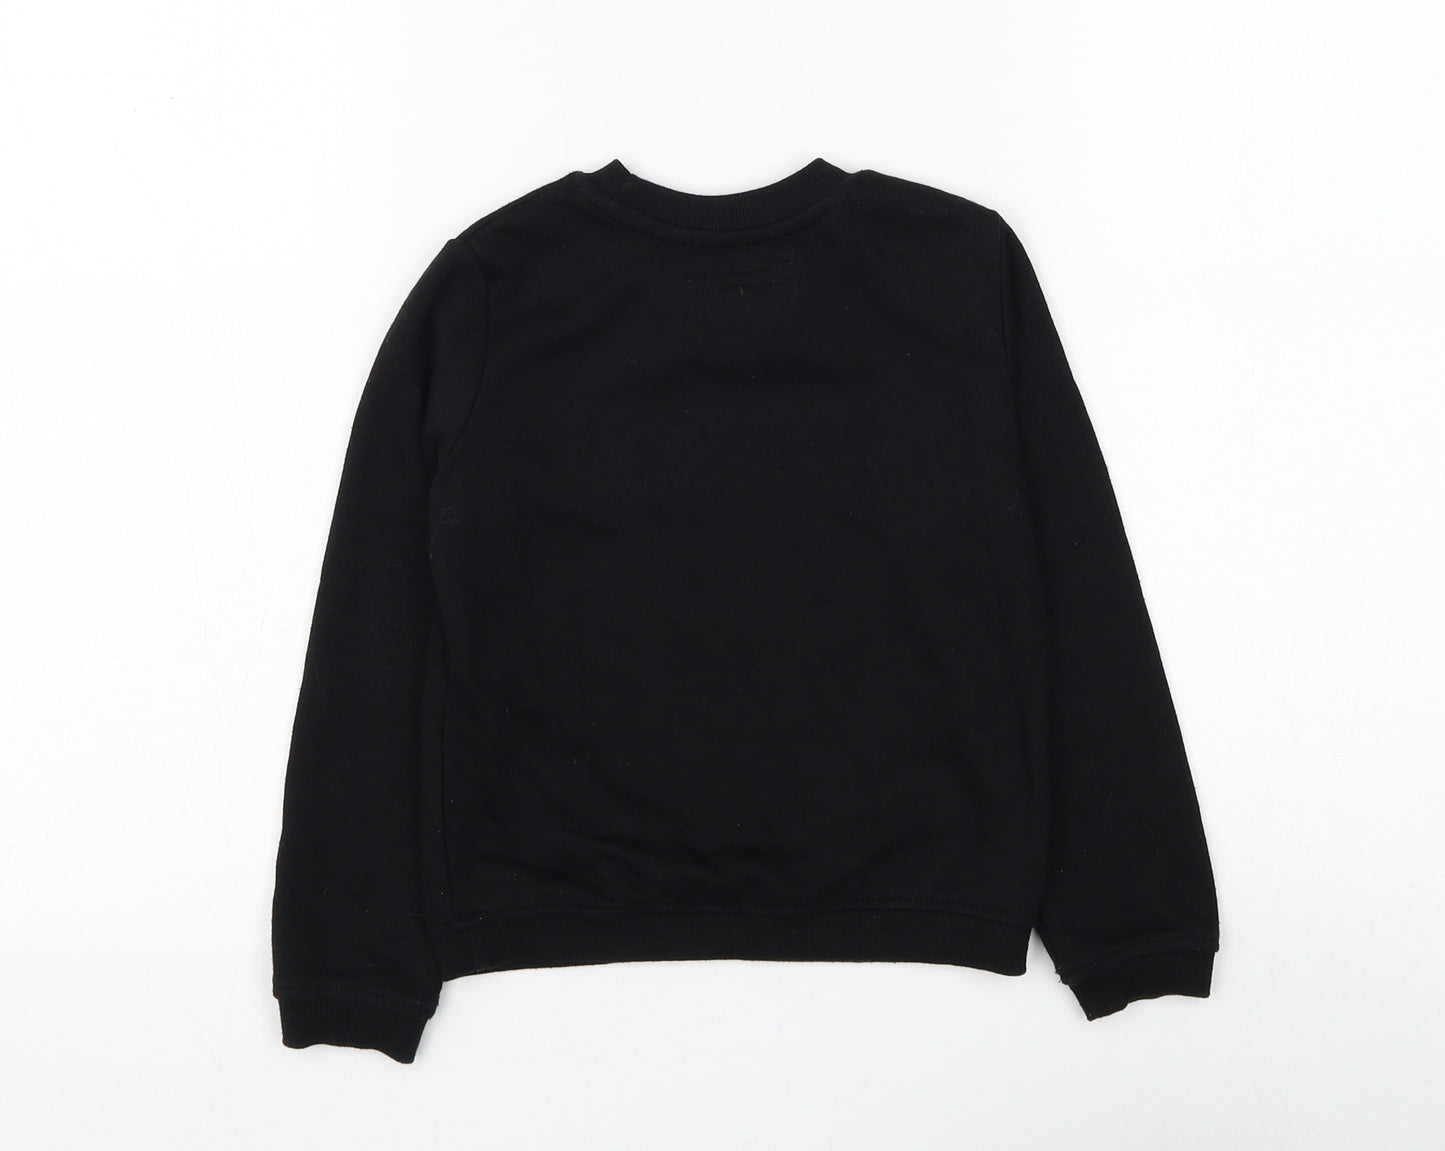 Primark Girls Black Polyester Pullover Sweatshirt Size 6-7 Years Pullover - Shine Bright Star